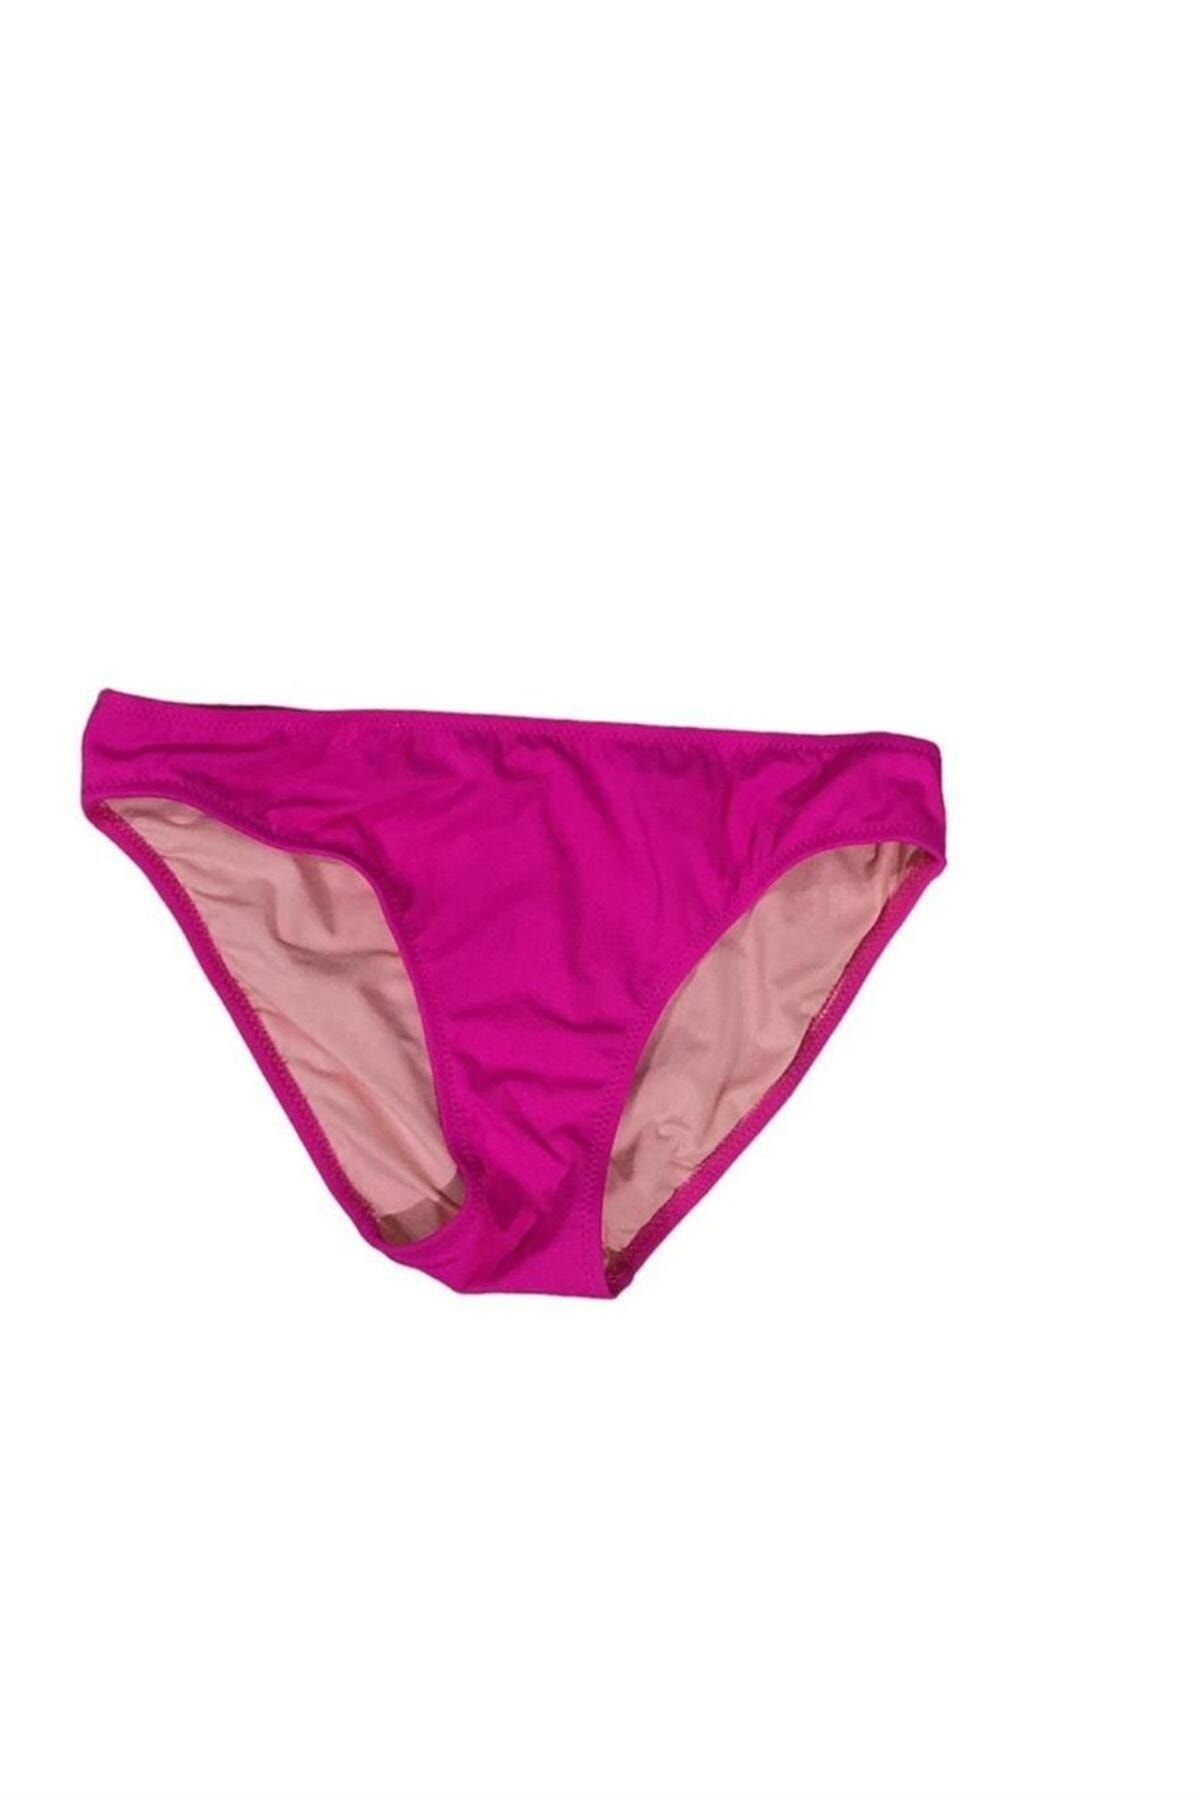 BELLA NOTTE Magic of the Night Dark pink Bikini Bottom P13a